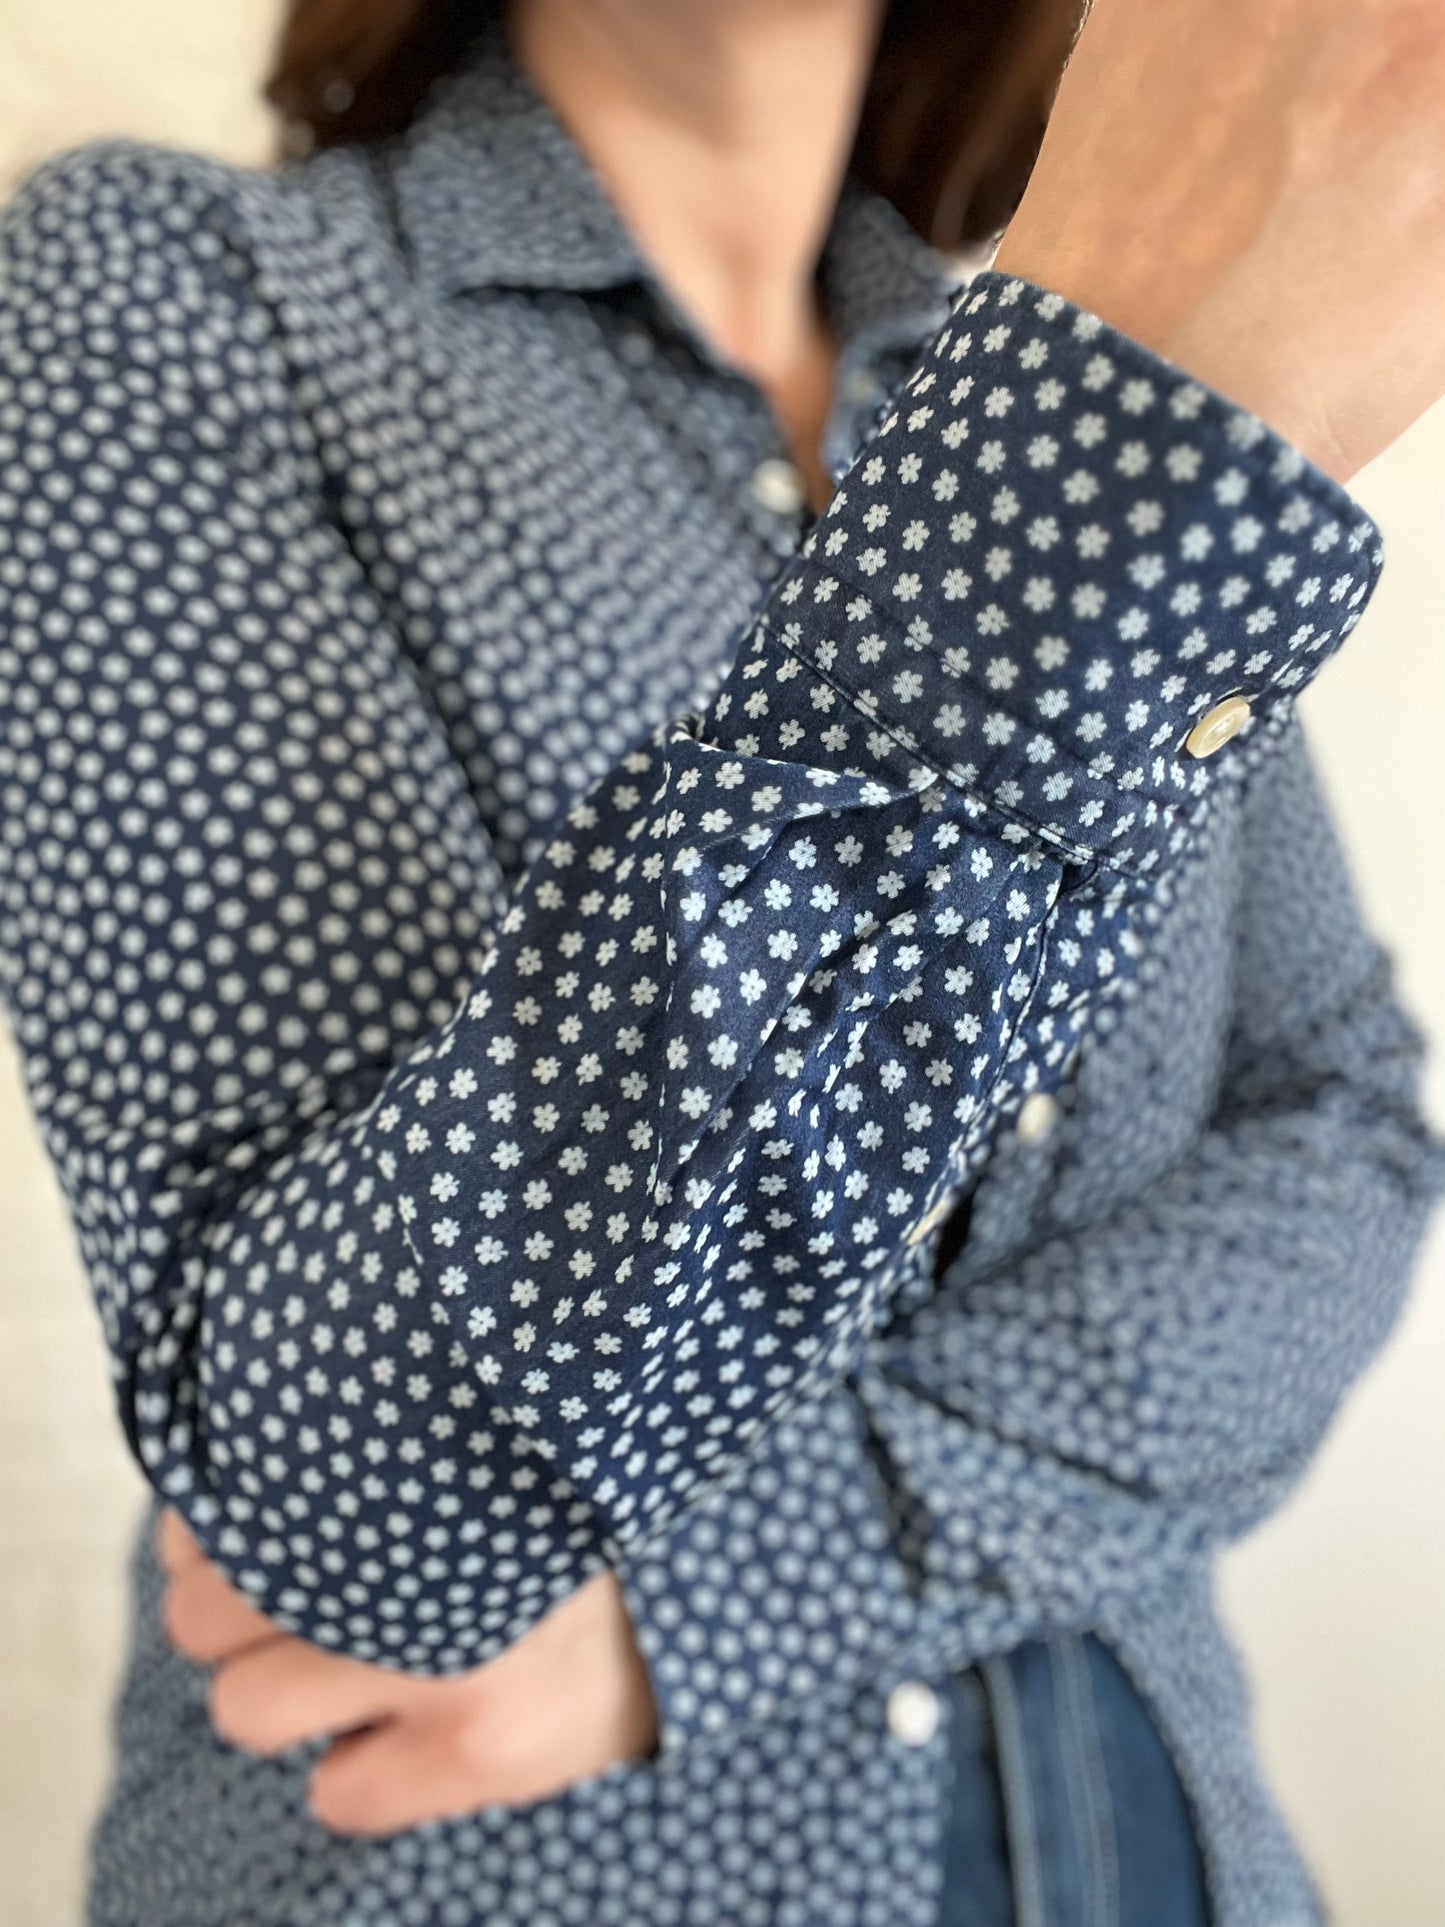 J Lindeberg Button-Up Floral Shirt - S